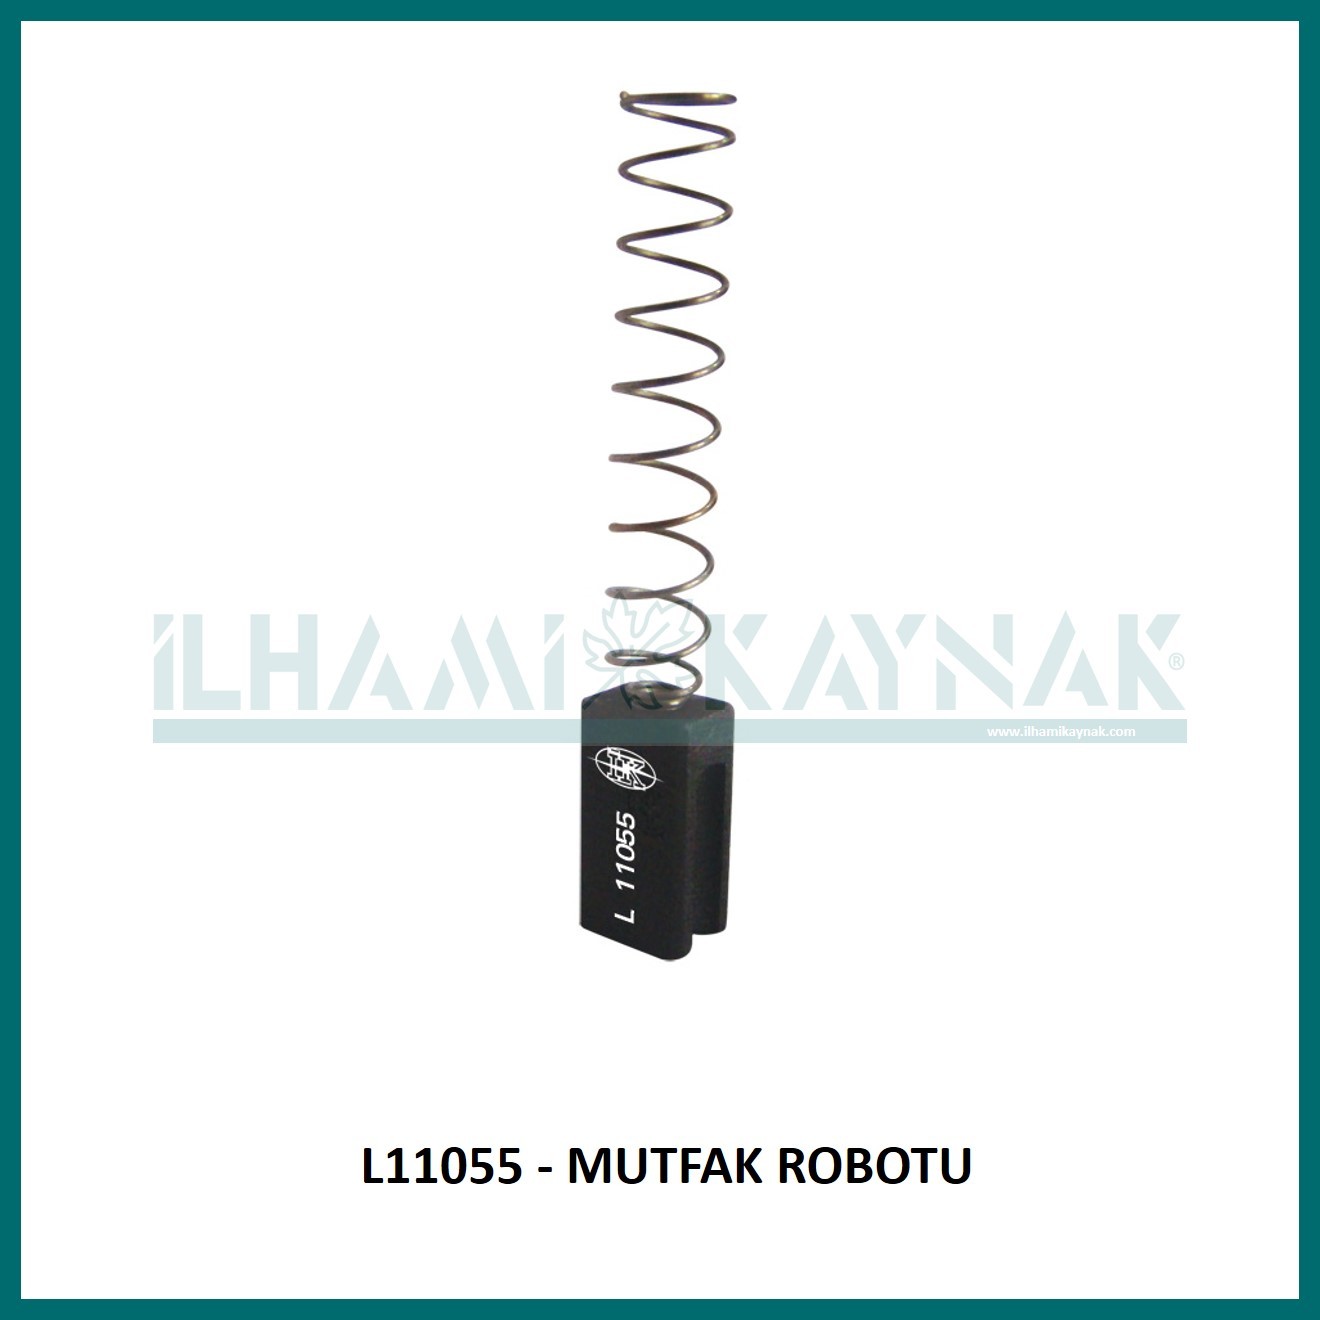 L11055 - MUTFAK ROBOTU - 6.5*9*16.5 mm - Minimum Satın Alım: 10 Adet